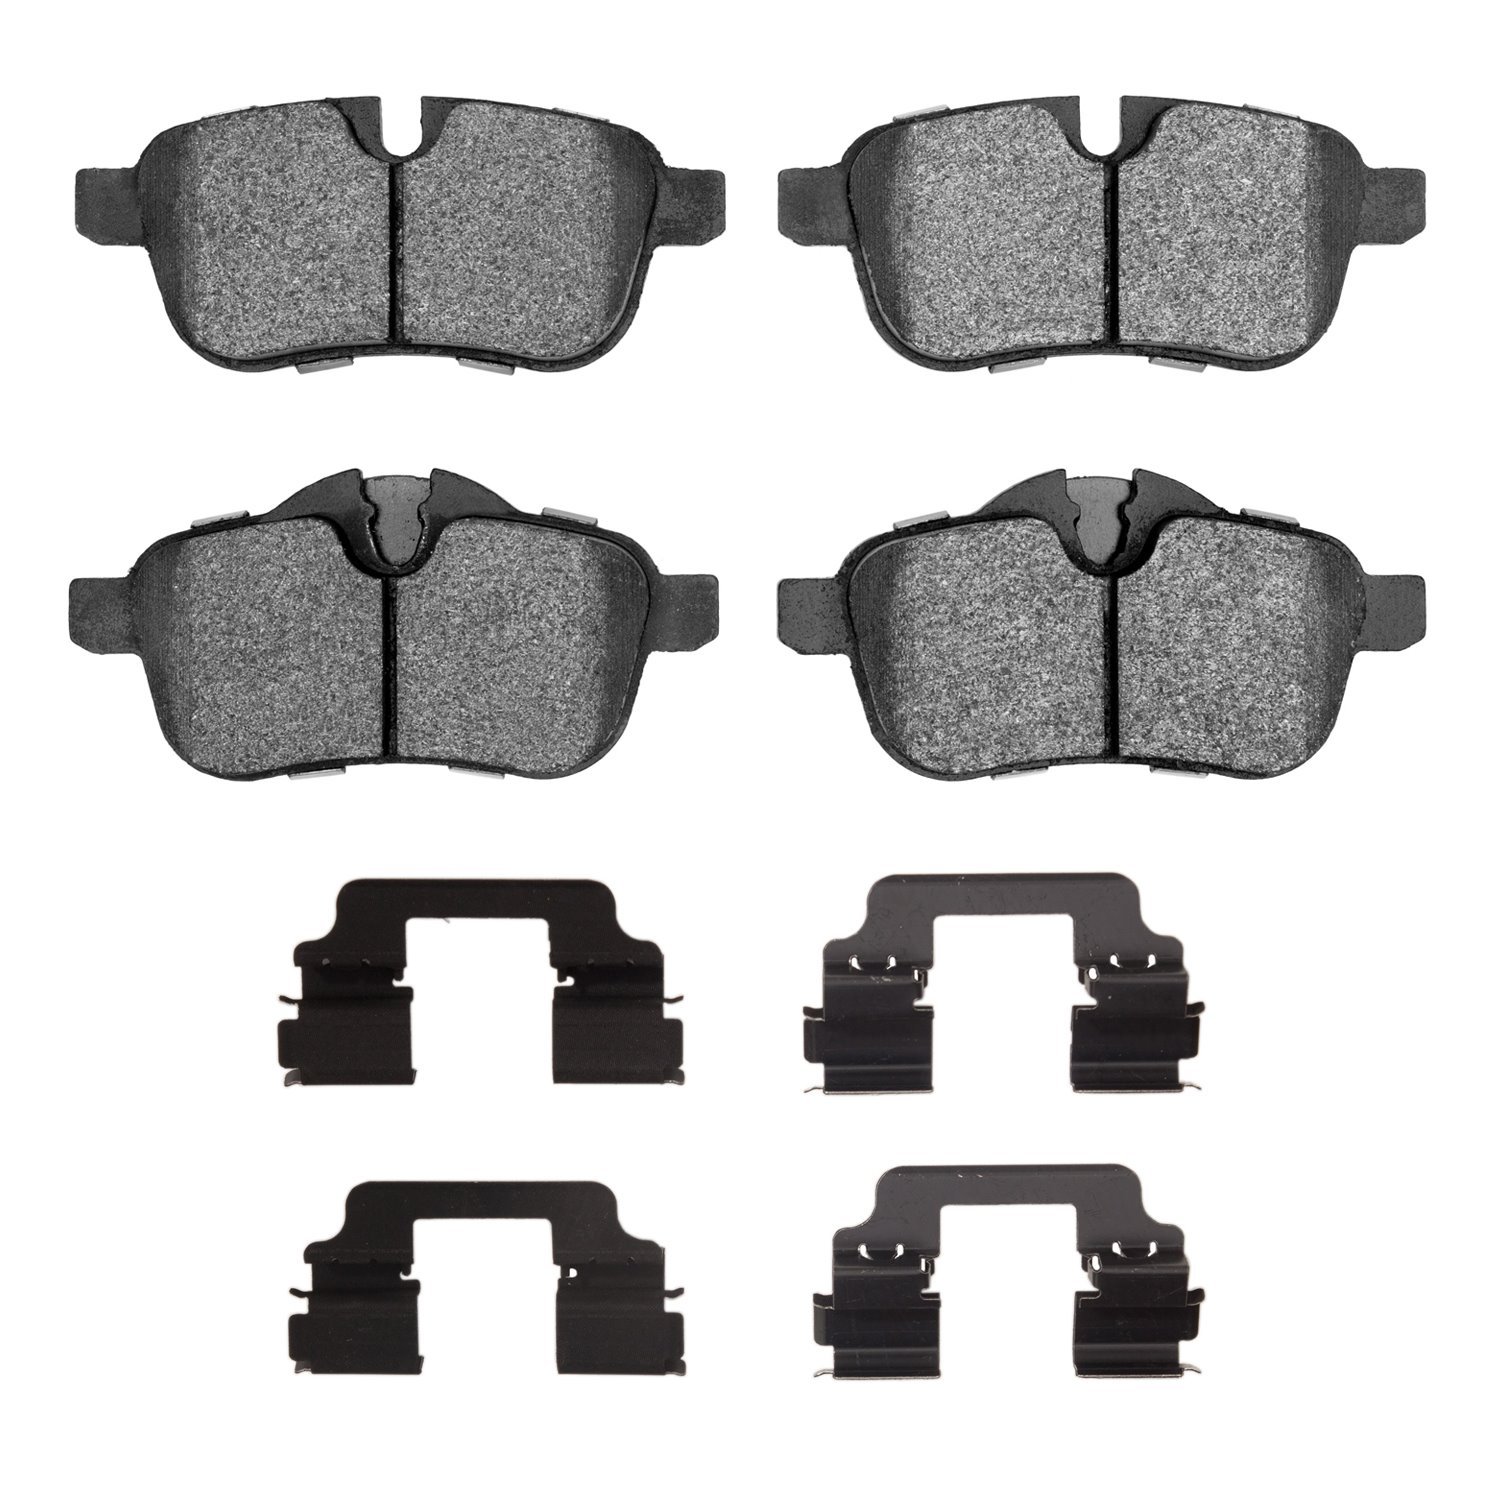 1310-1433-01 3000-Series Ceramic Brake Pads & Hardware Kit, Fits Select BMW, Position: Rear